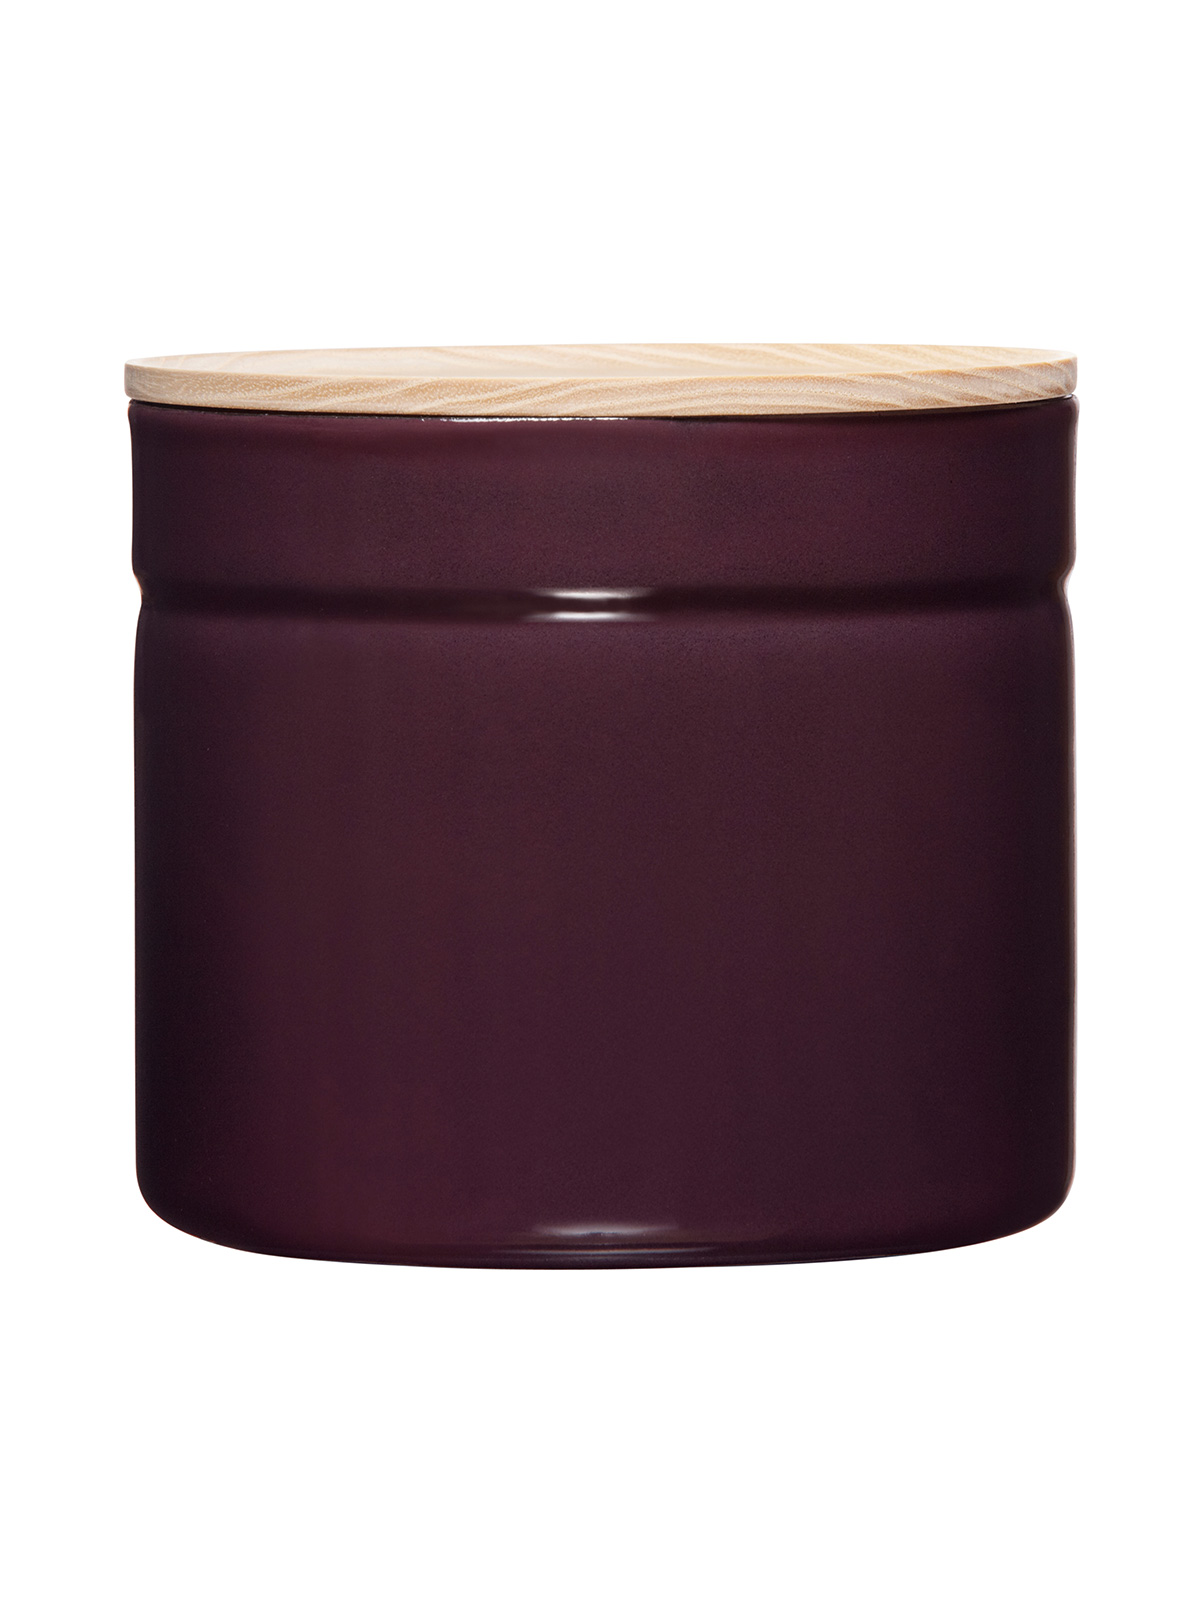 storage container aubergine 1390 ml (2174-201)